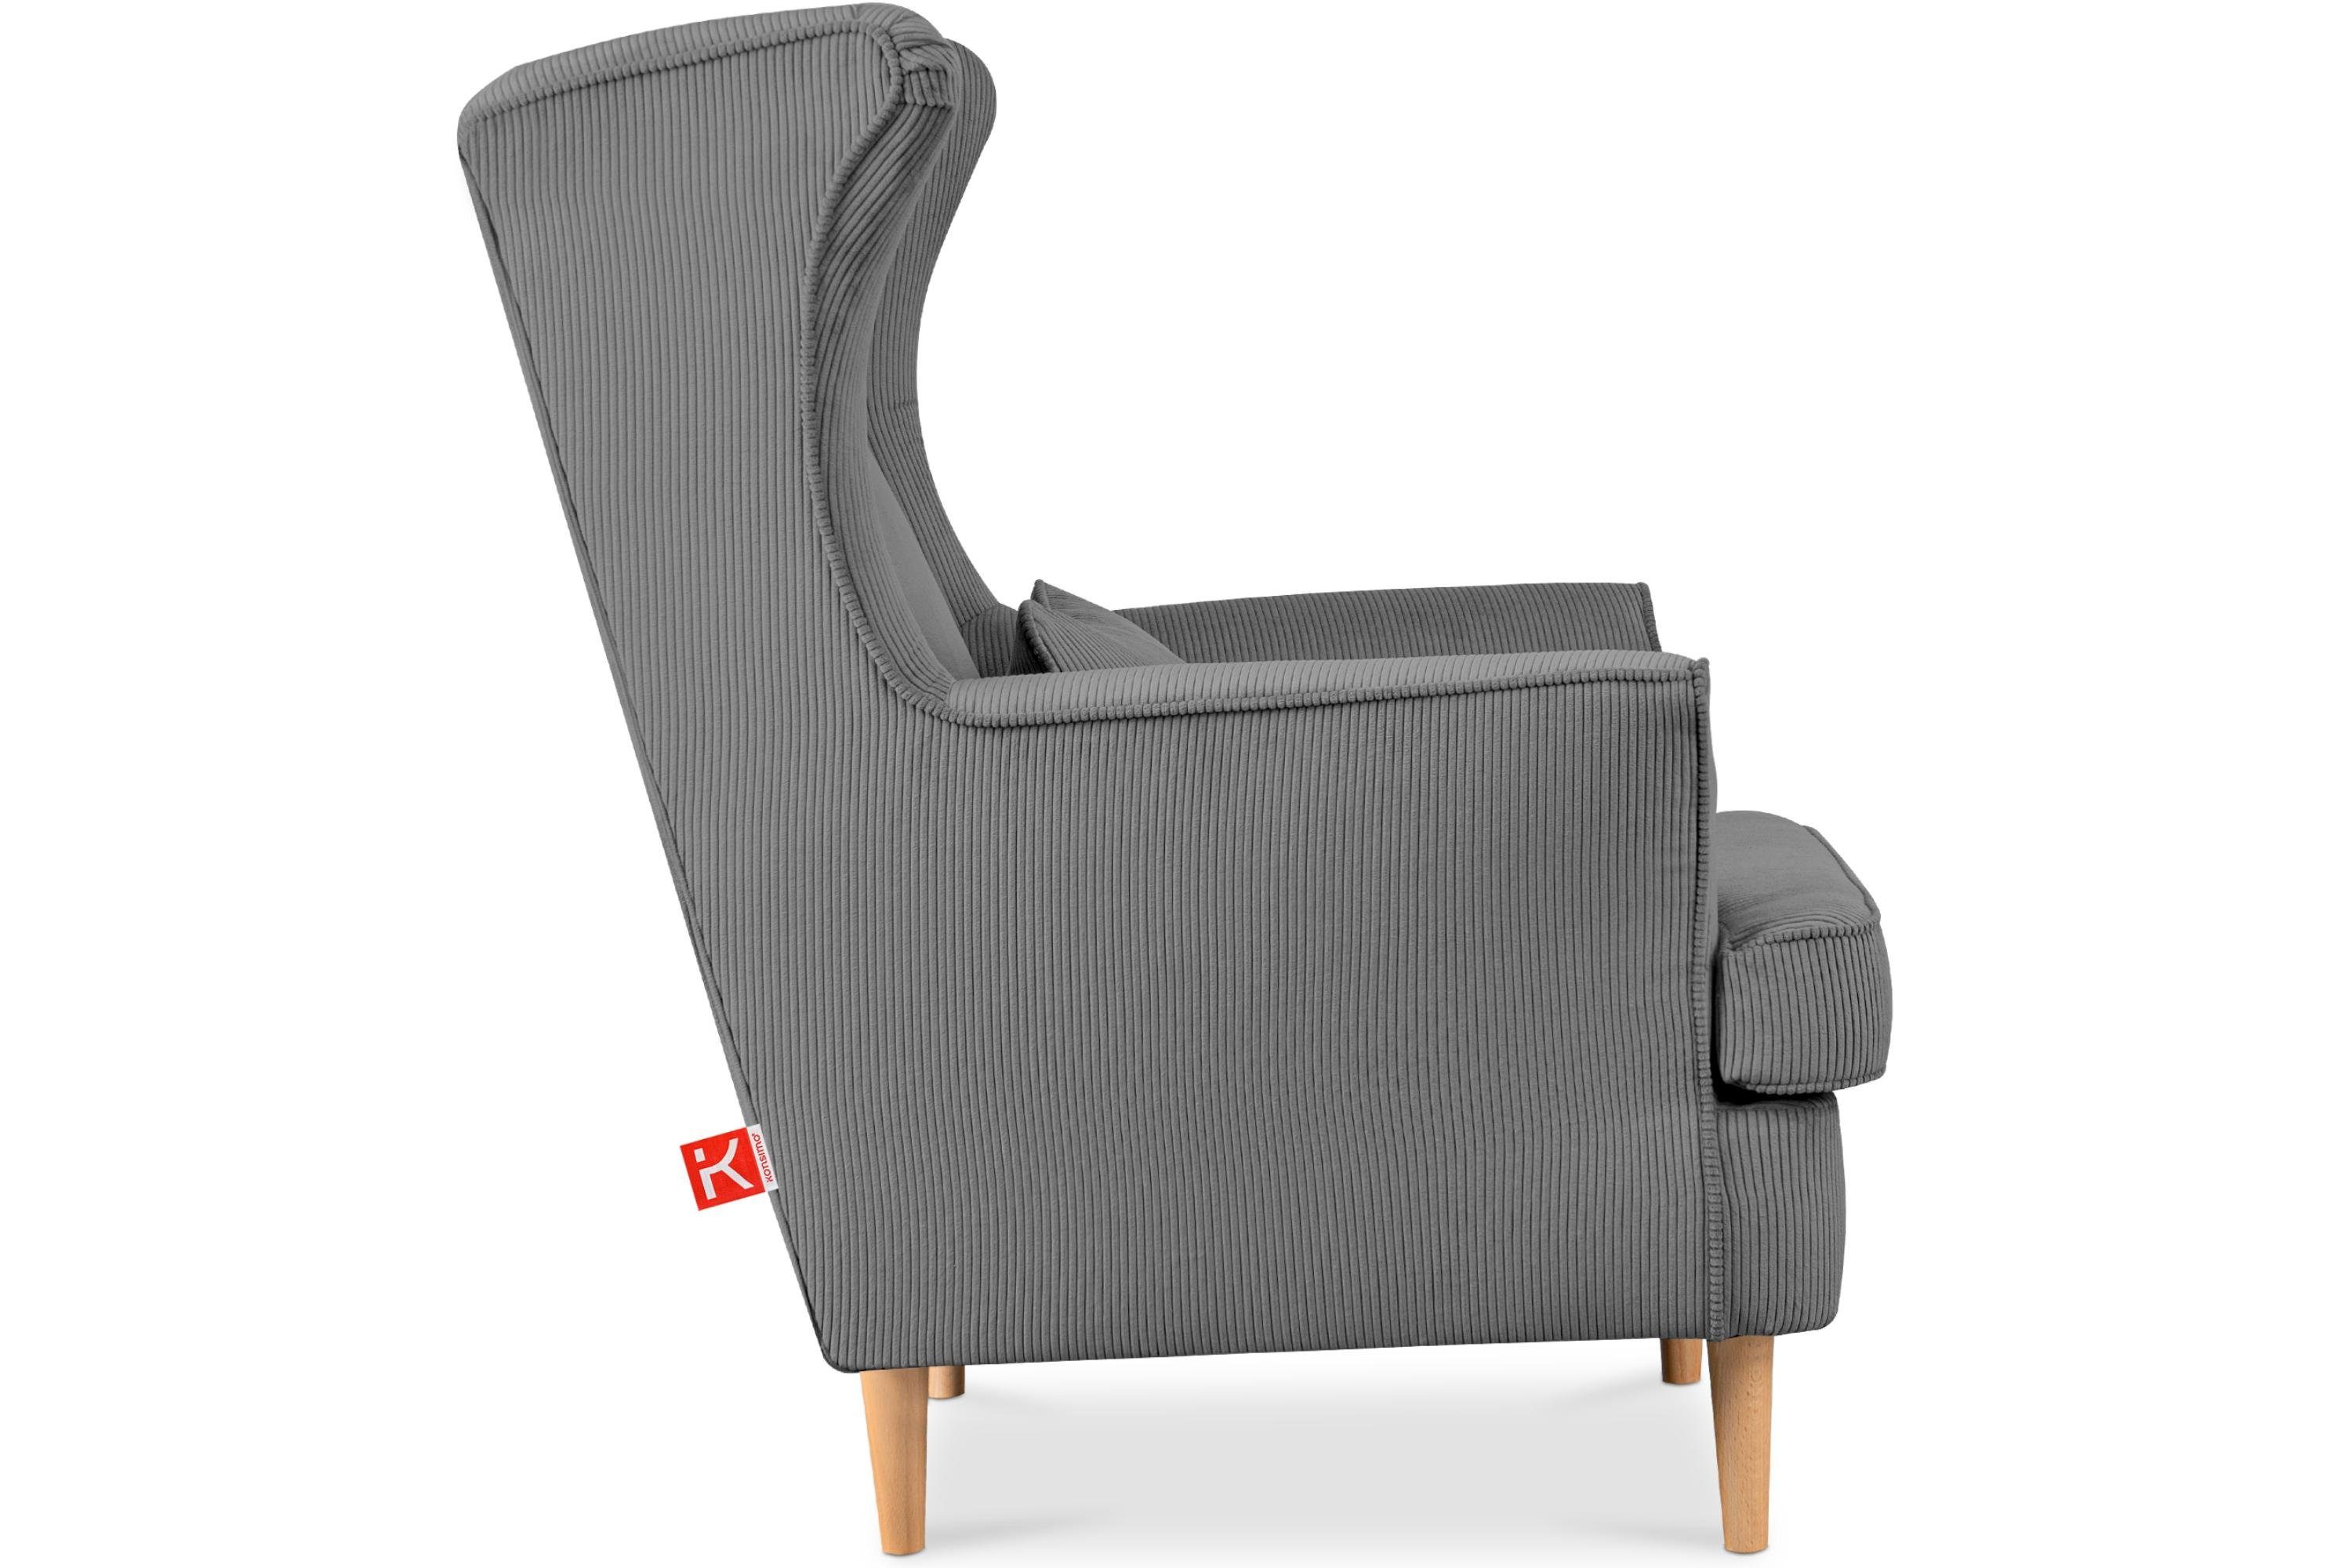 Sessel, hohe Ohrensessel inklusive Konsimo STRALIS Füße, Design, dekorativem zeitloses Kissen